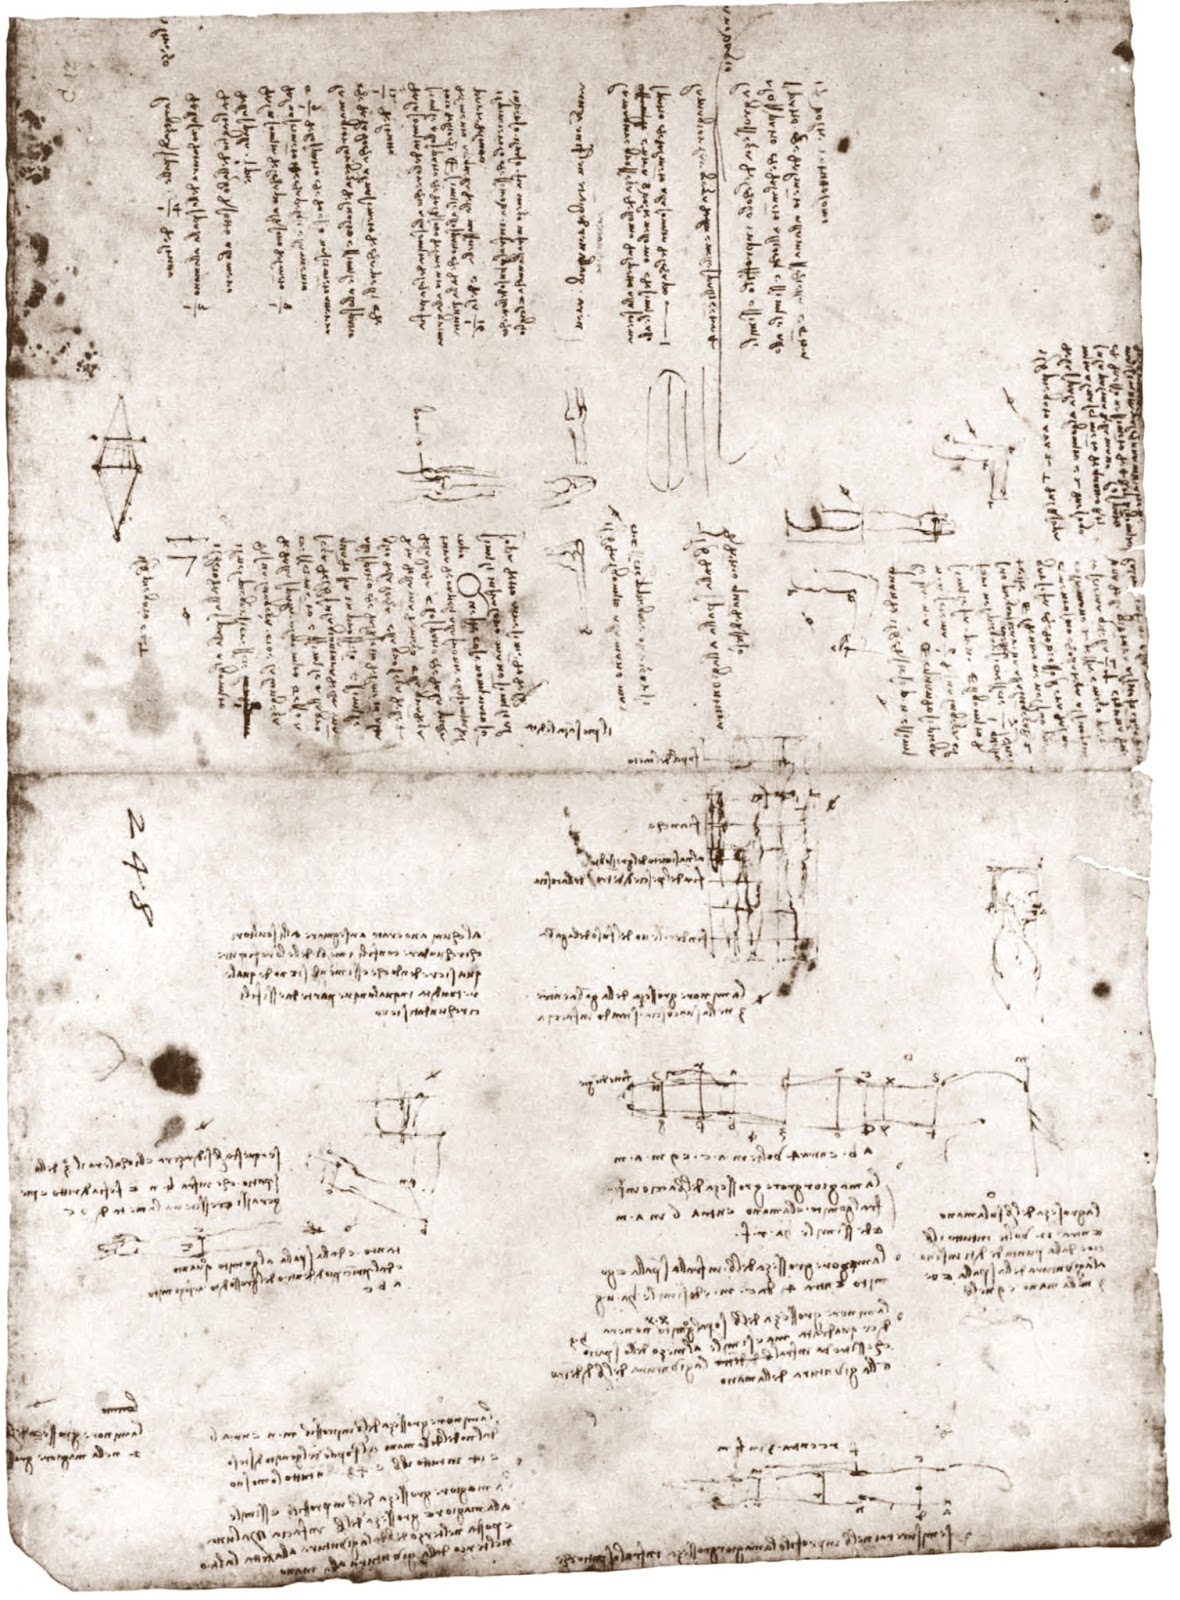 Leonardo+da+Vinci-1452-1519 (822).jpg